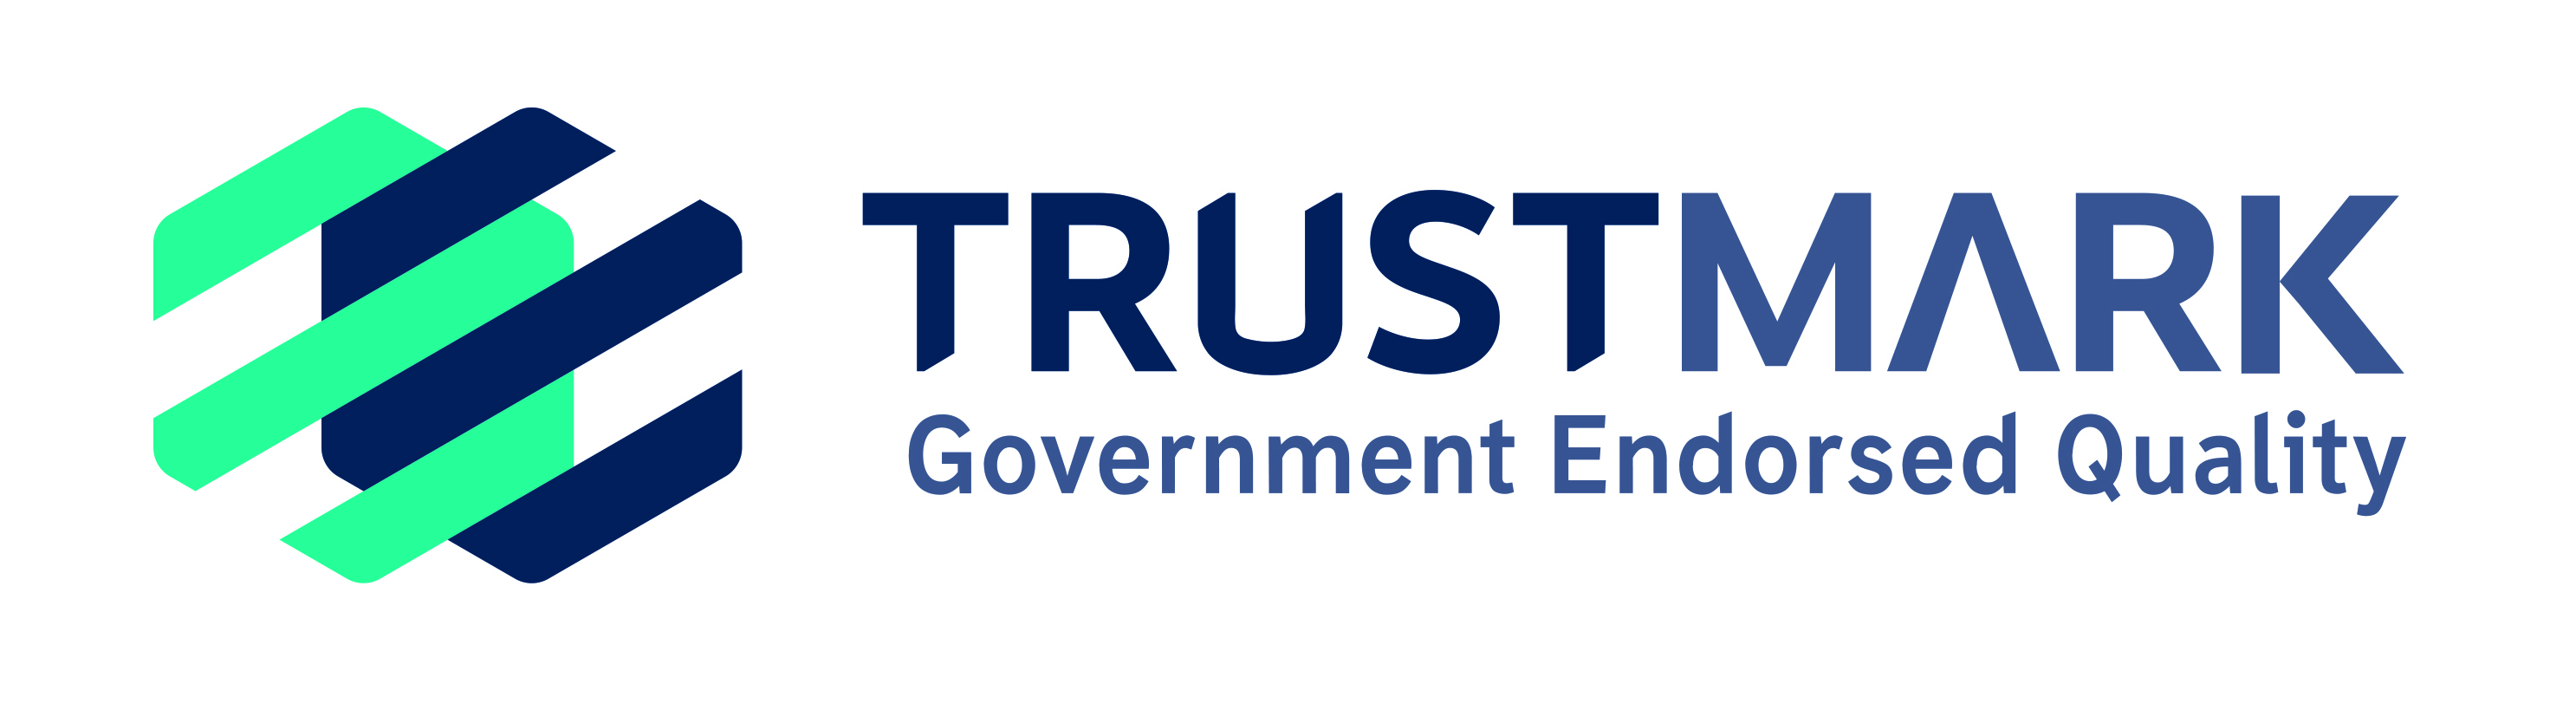 find local tradesmen - TrustMark government endorsed standards